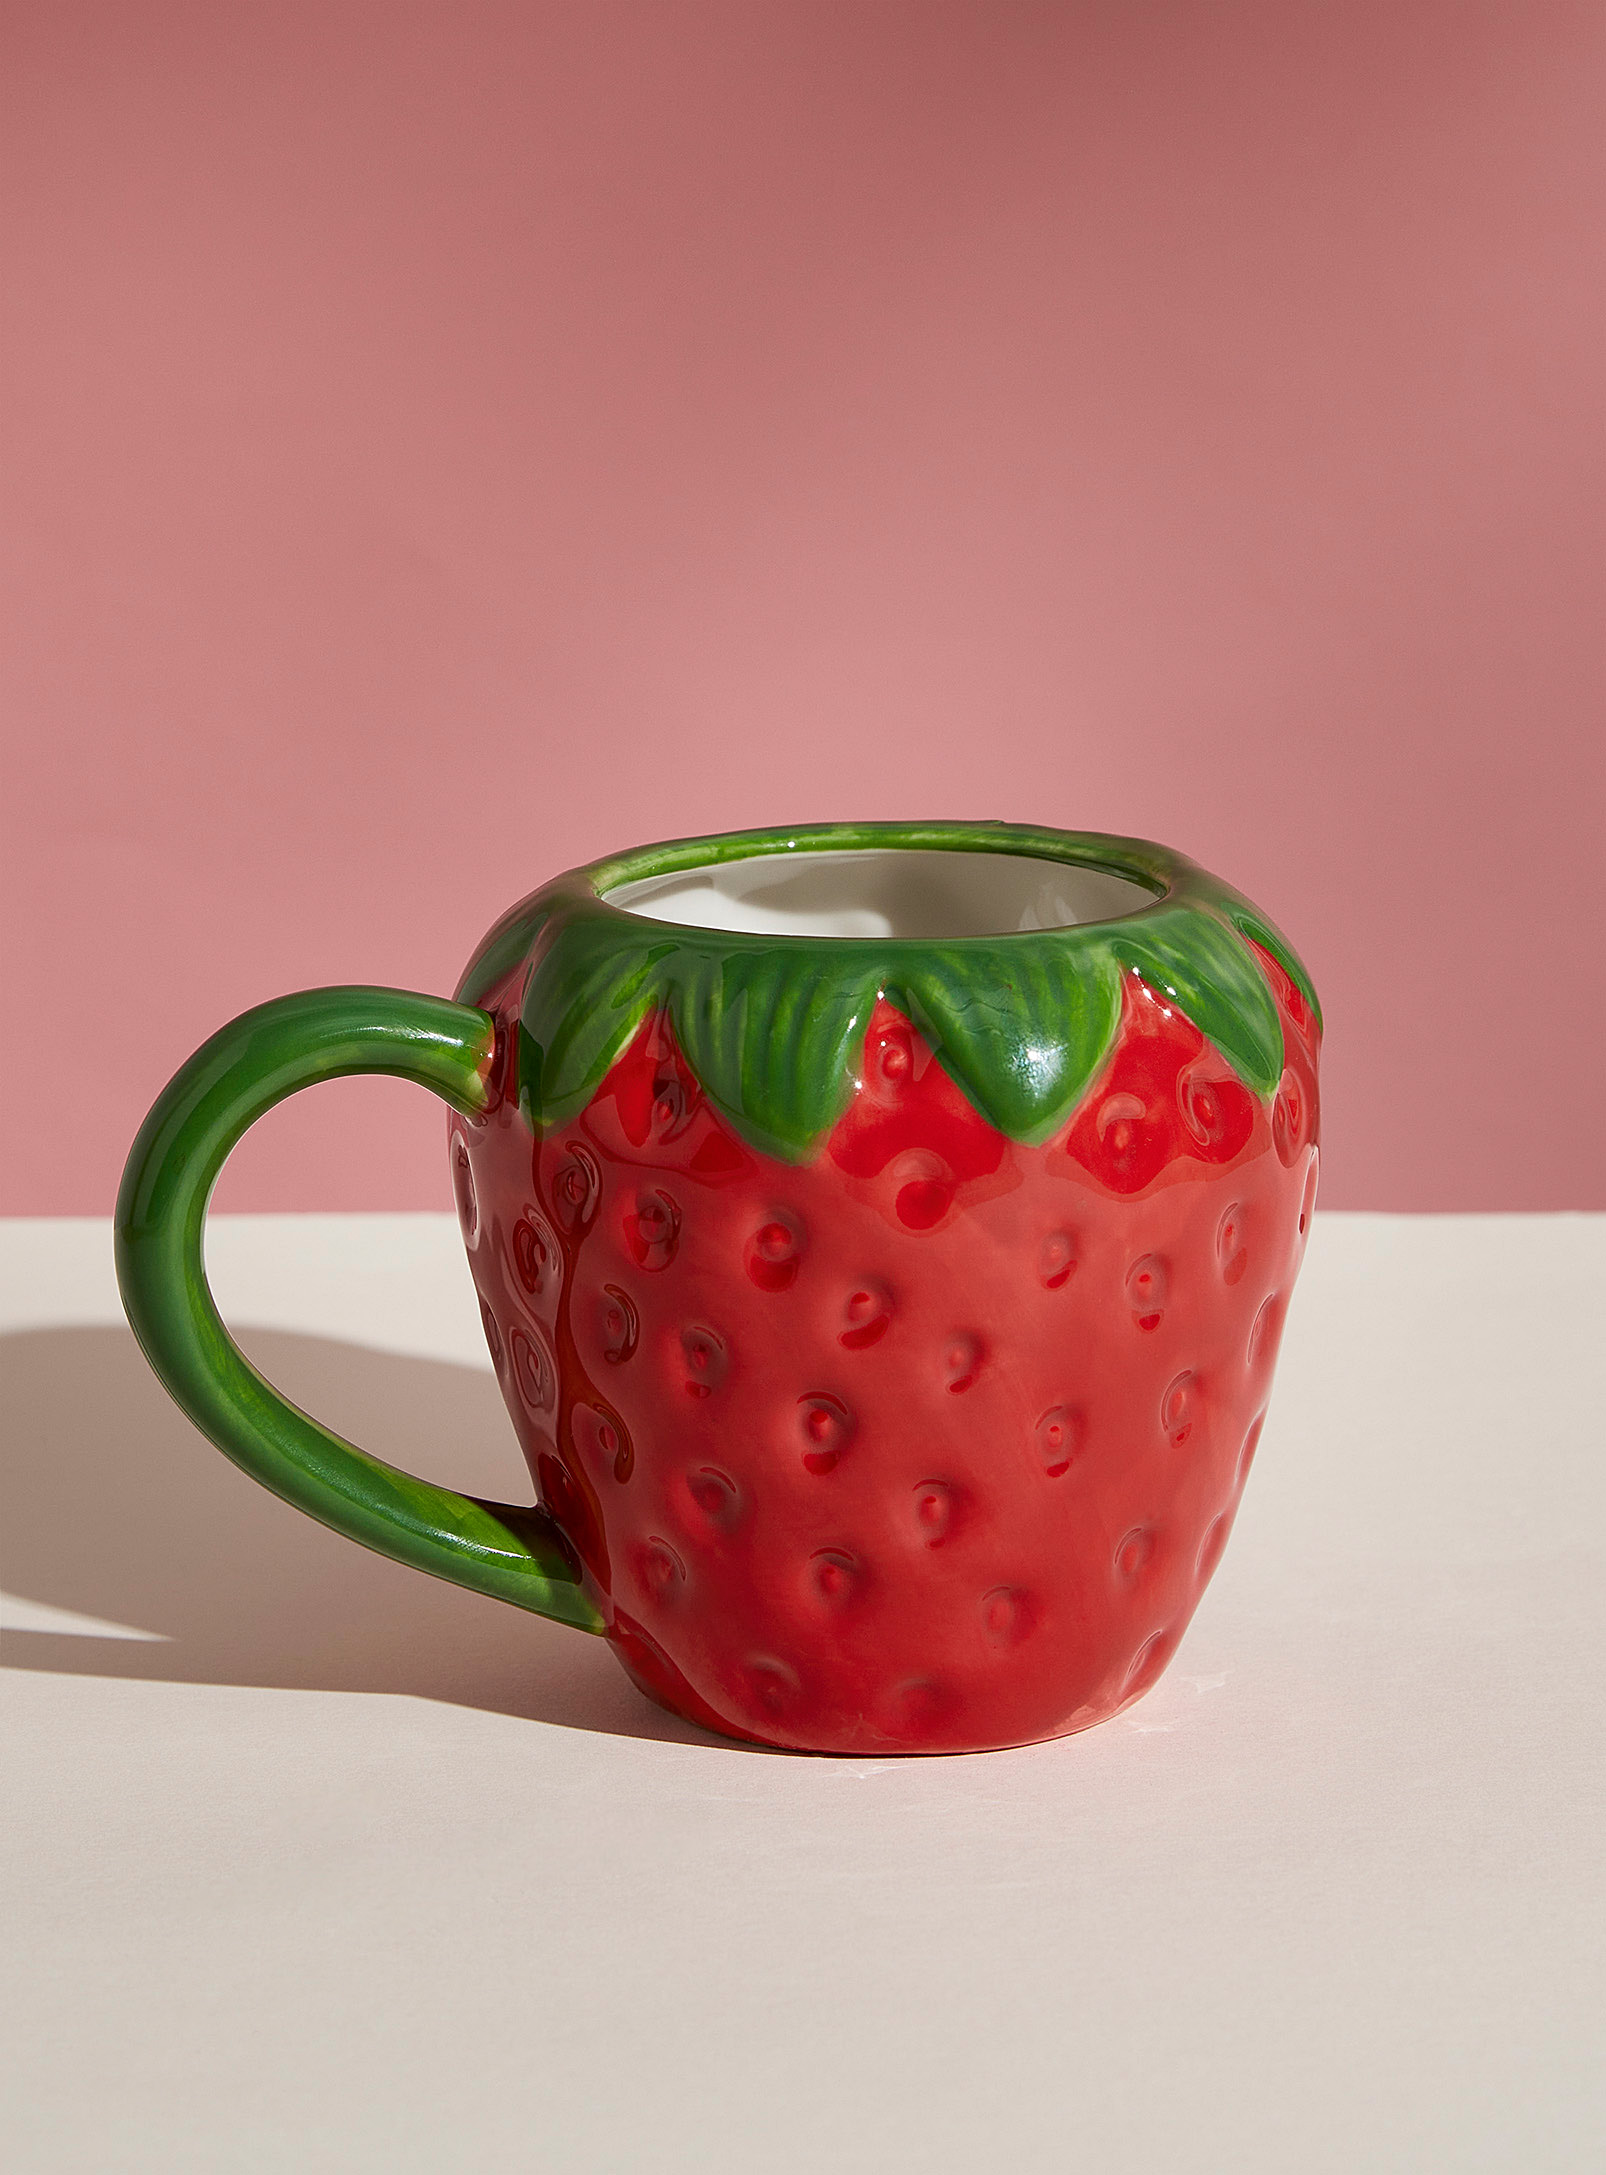 Simons Maison - La tasse fraise